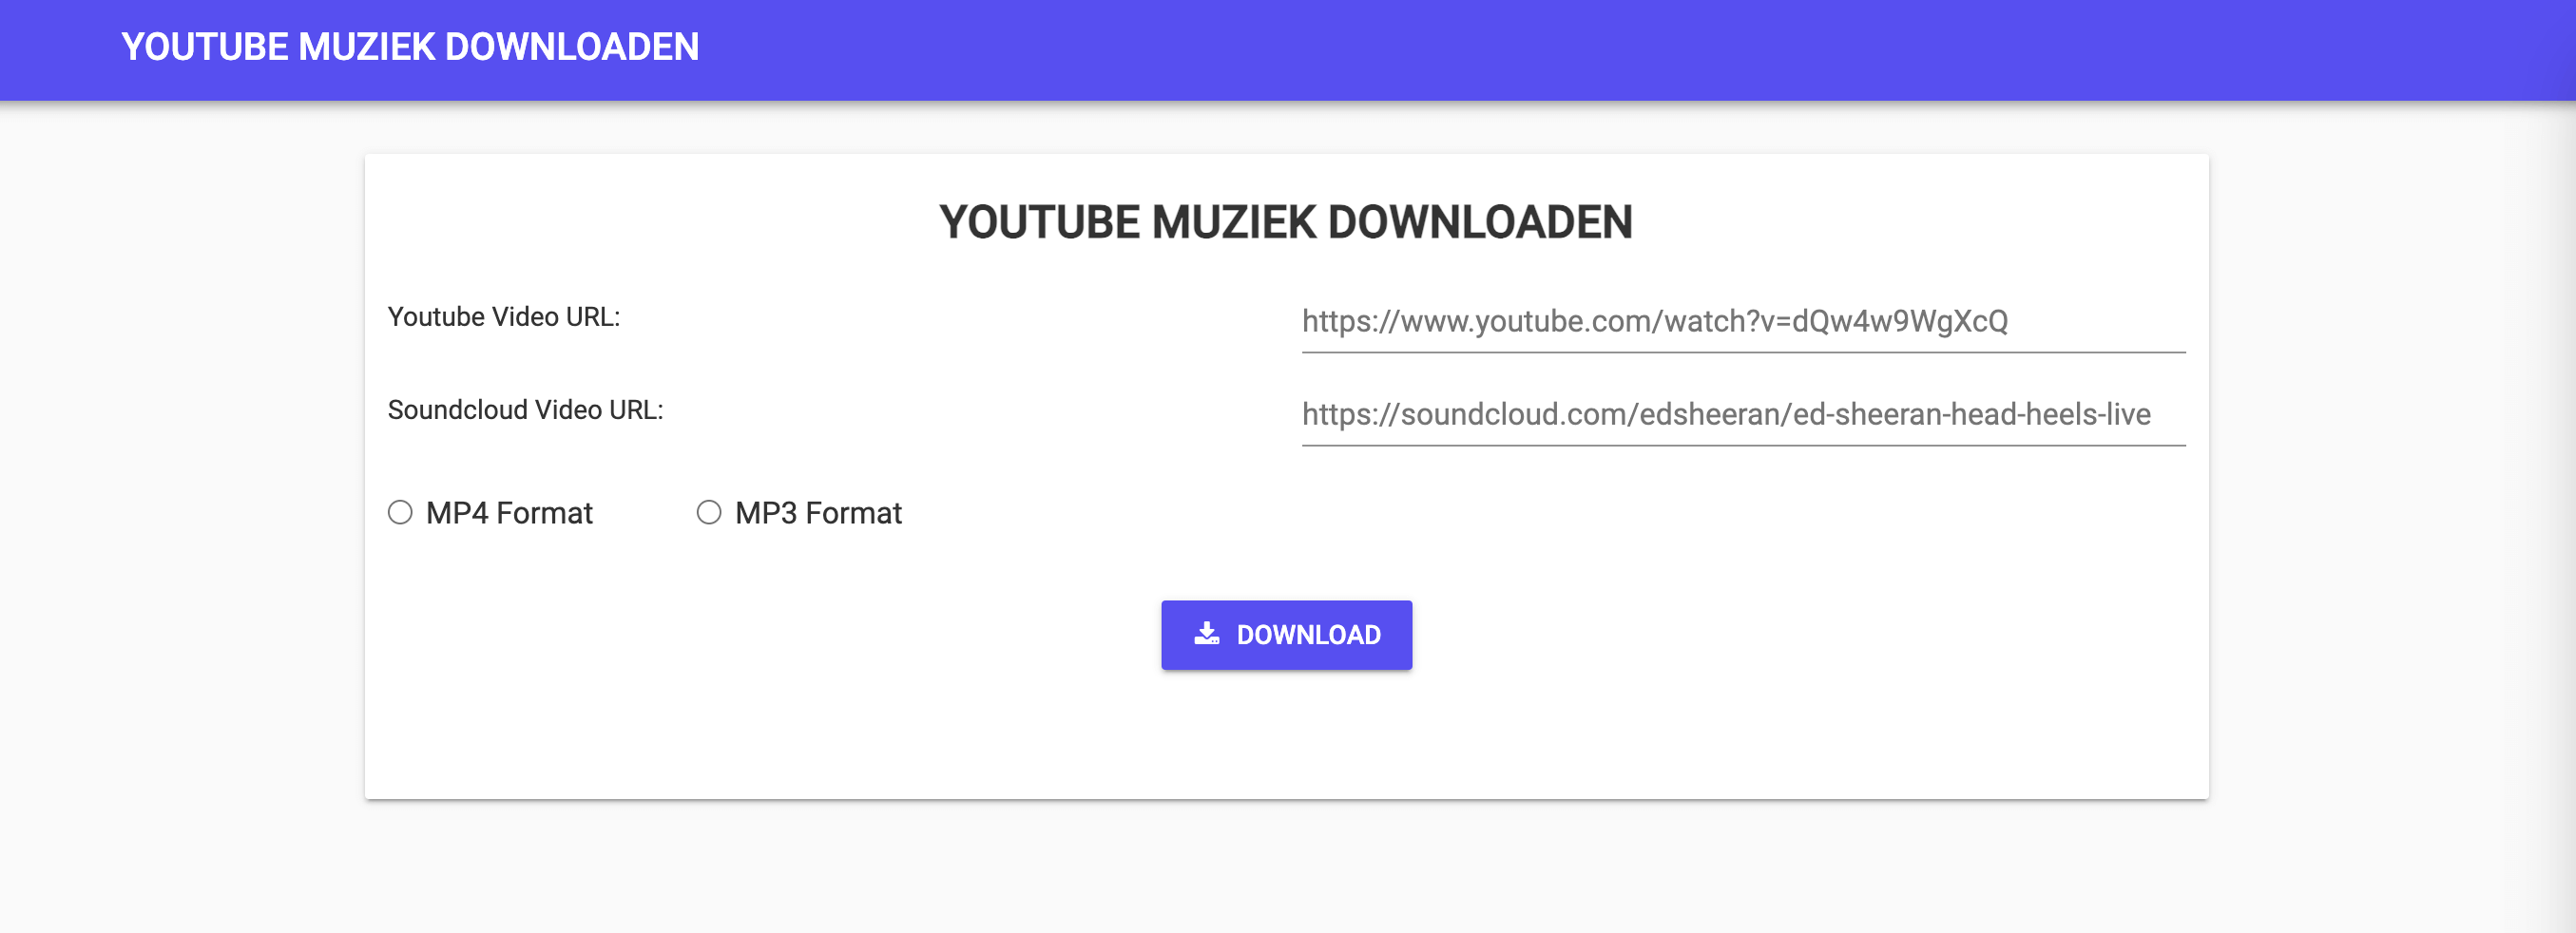 Youtube muziek downloader software